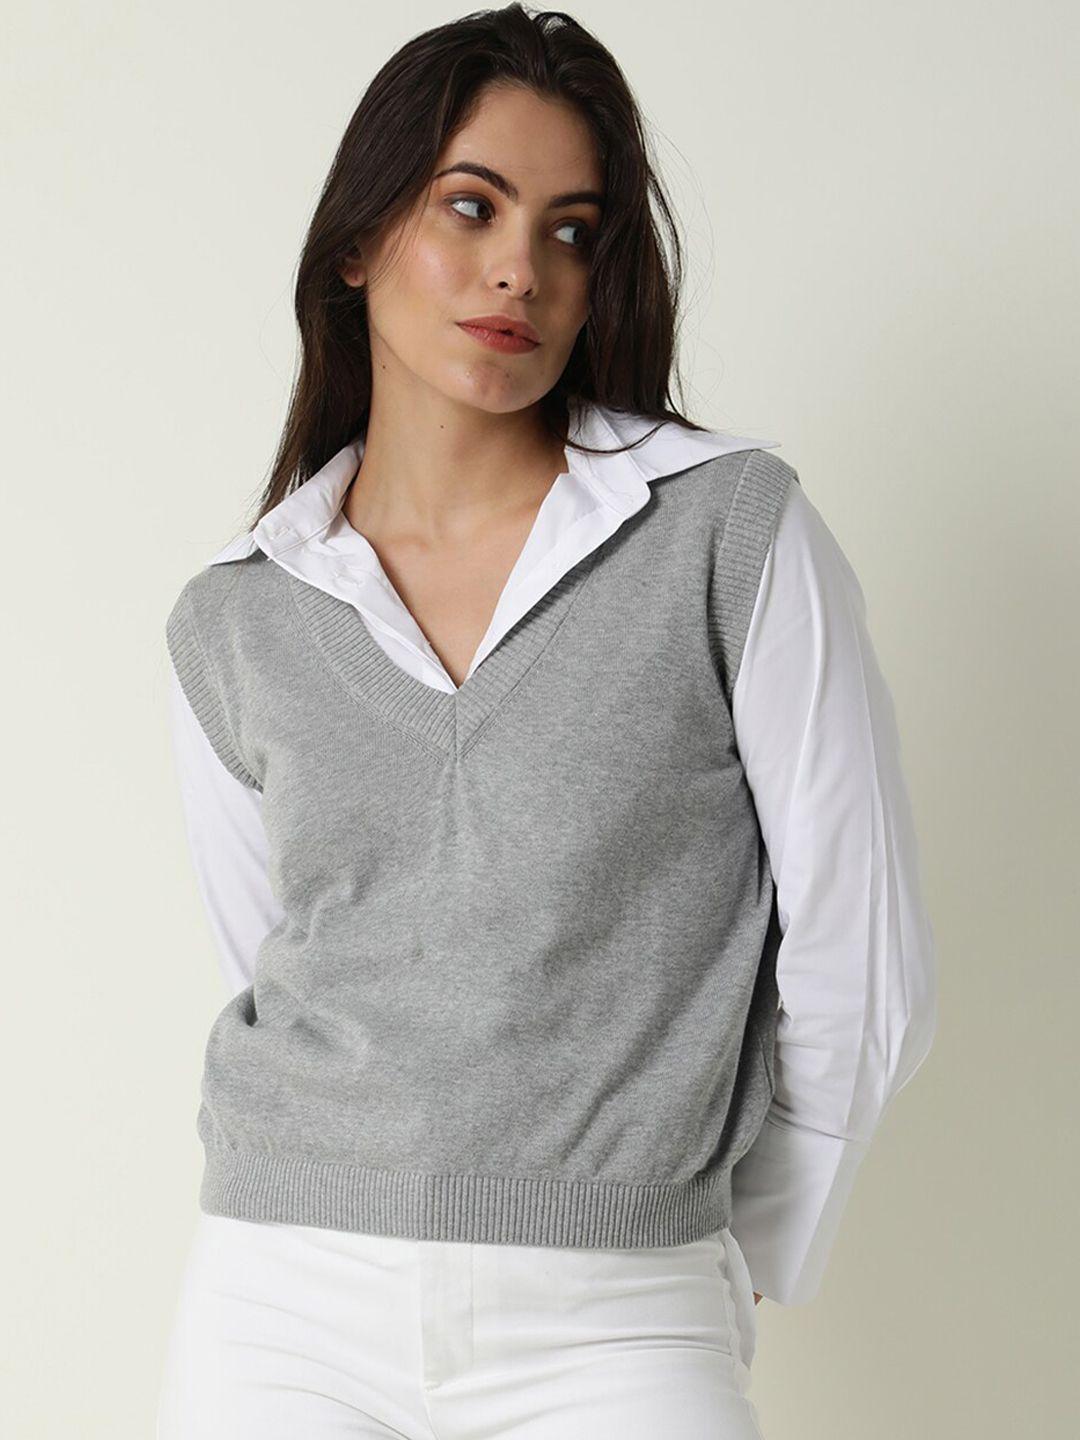 rareism women grey sweater vest